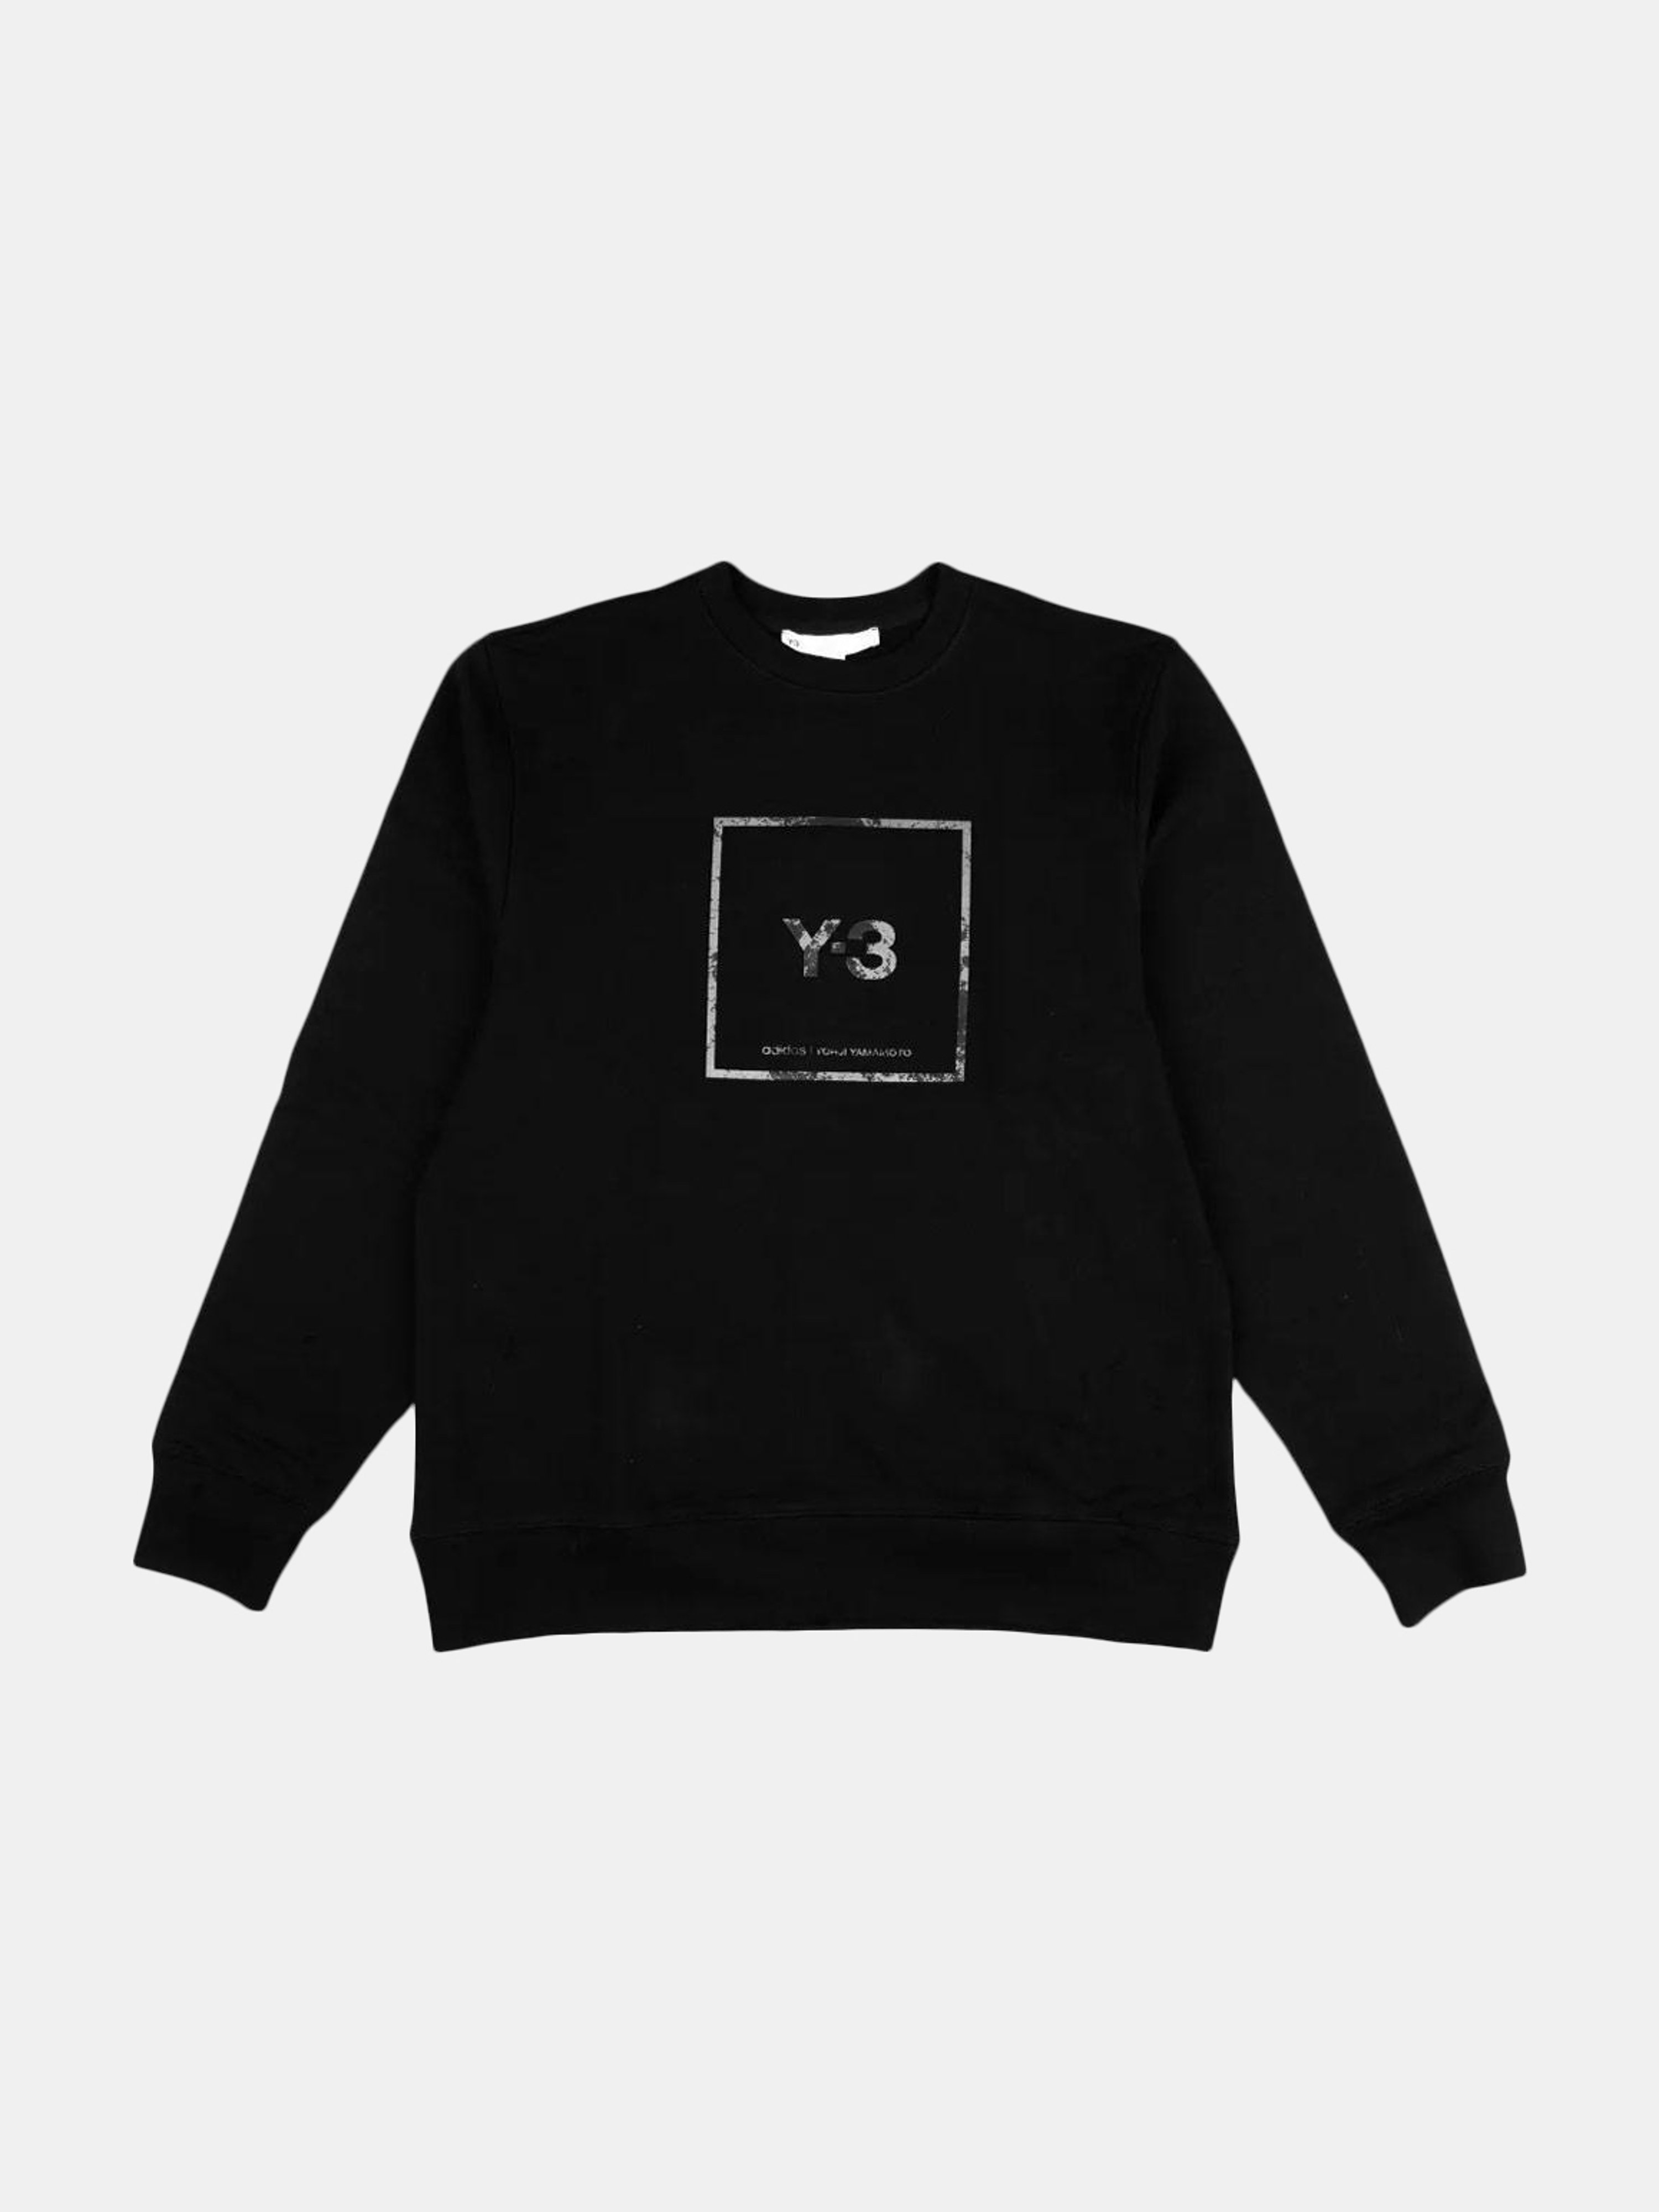 Adidas Originals Adidas Y-3 Square Label Graphic Crew Sweatshirt In Black